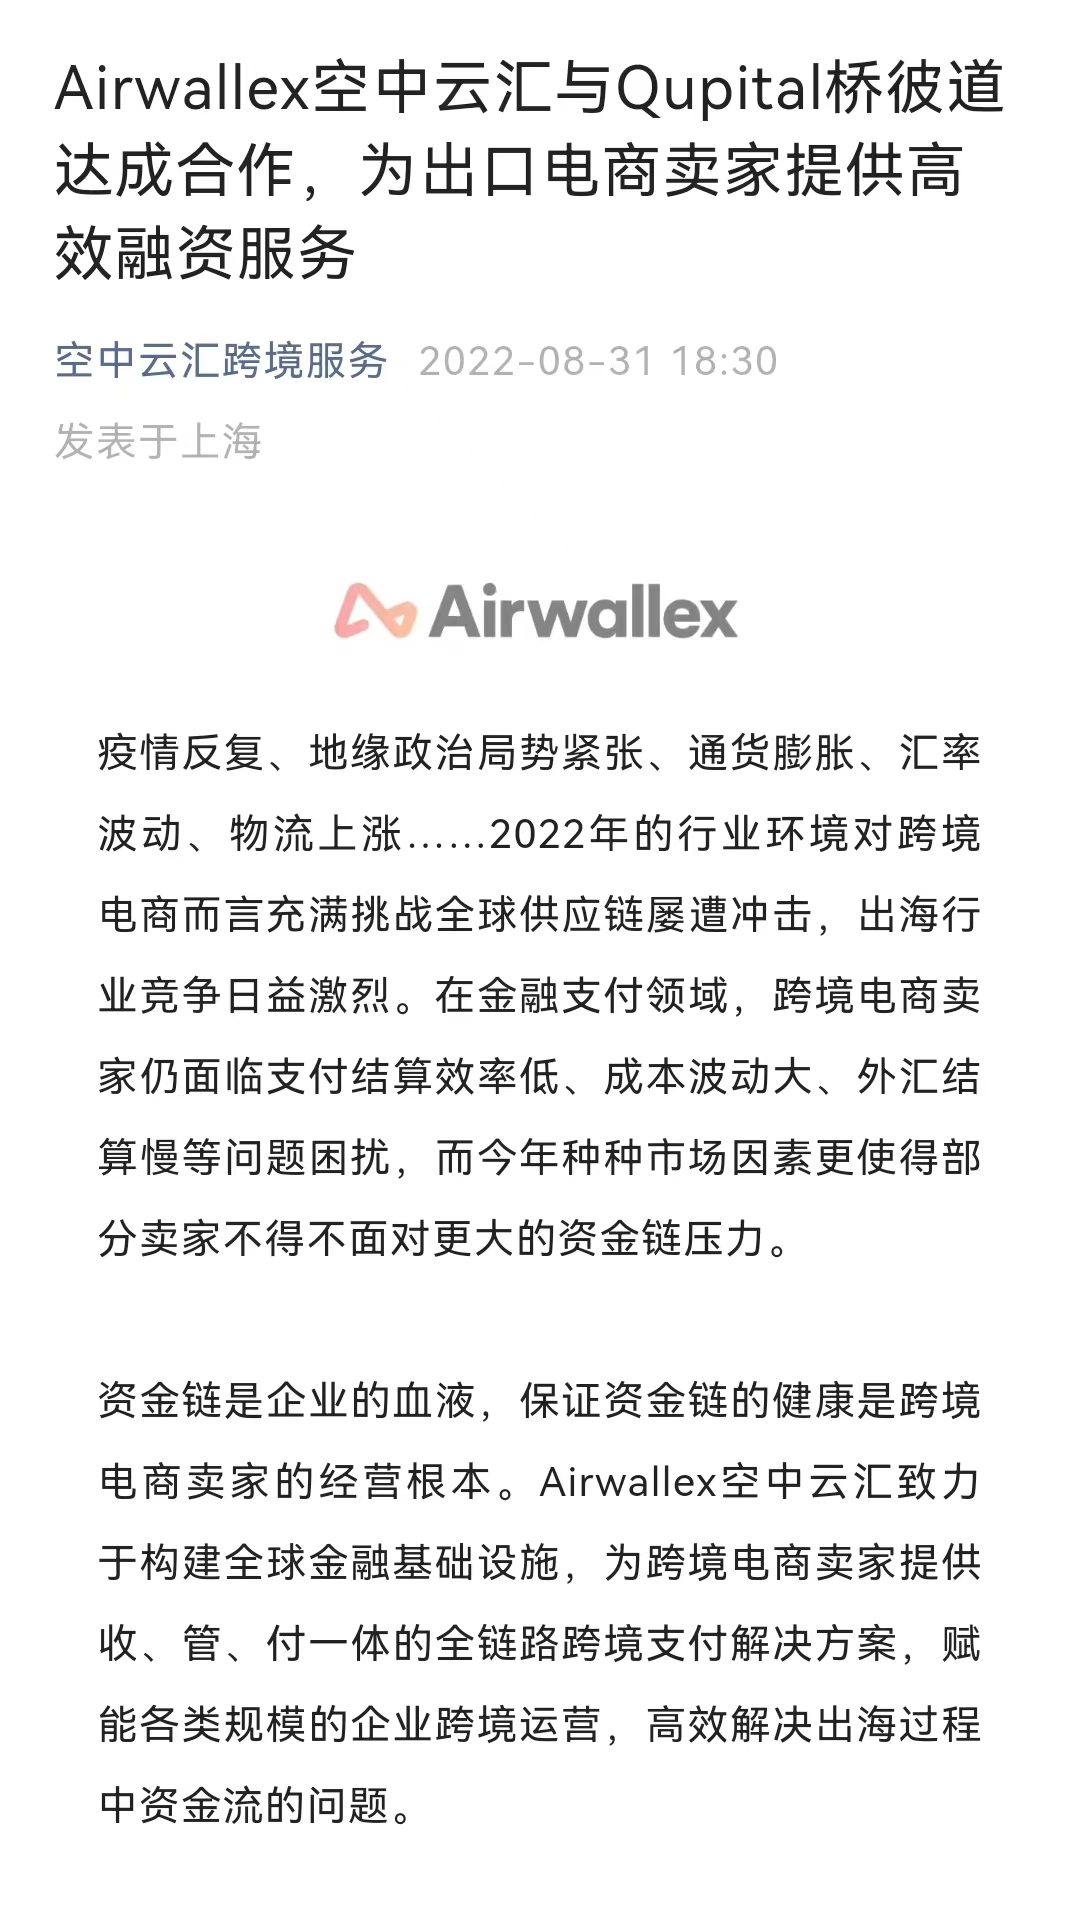 Airwallex空中云汇与Qupital桥彼道合作 为出口电商卖家提供融资服务